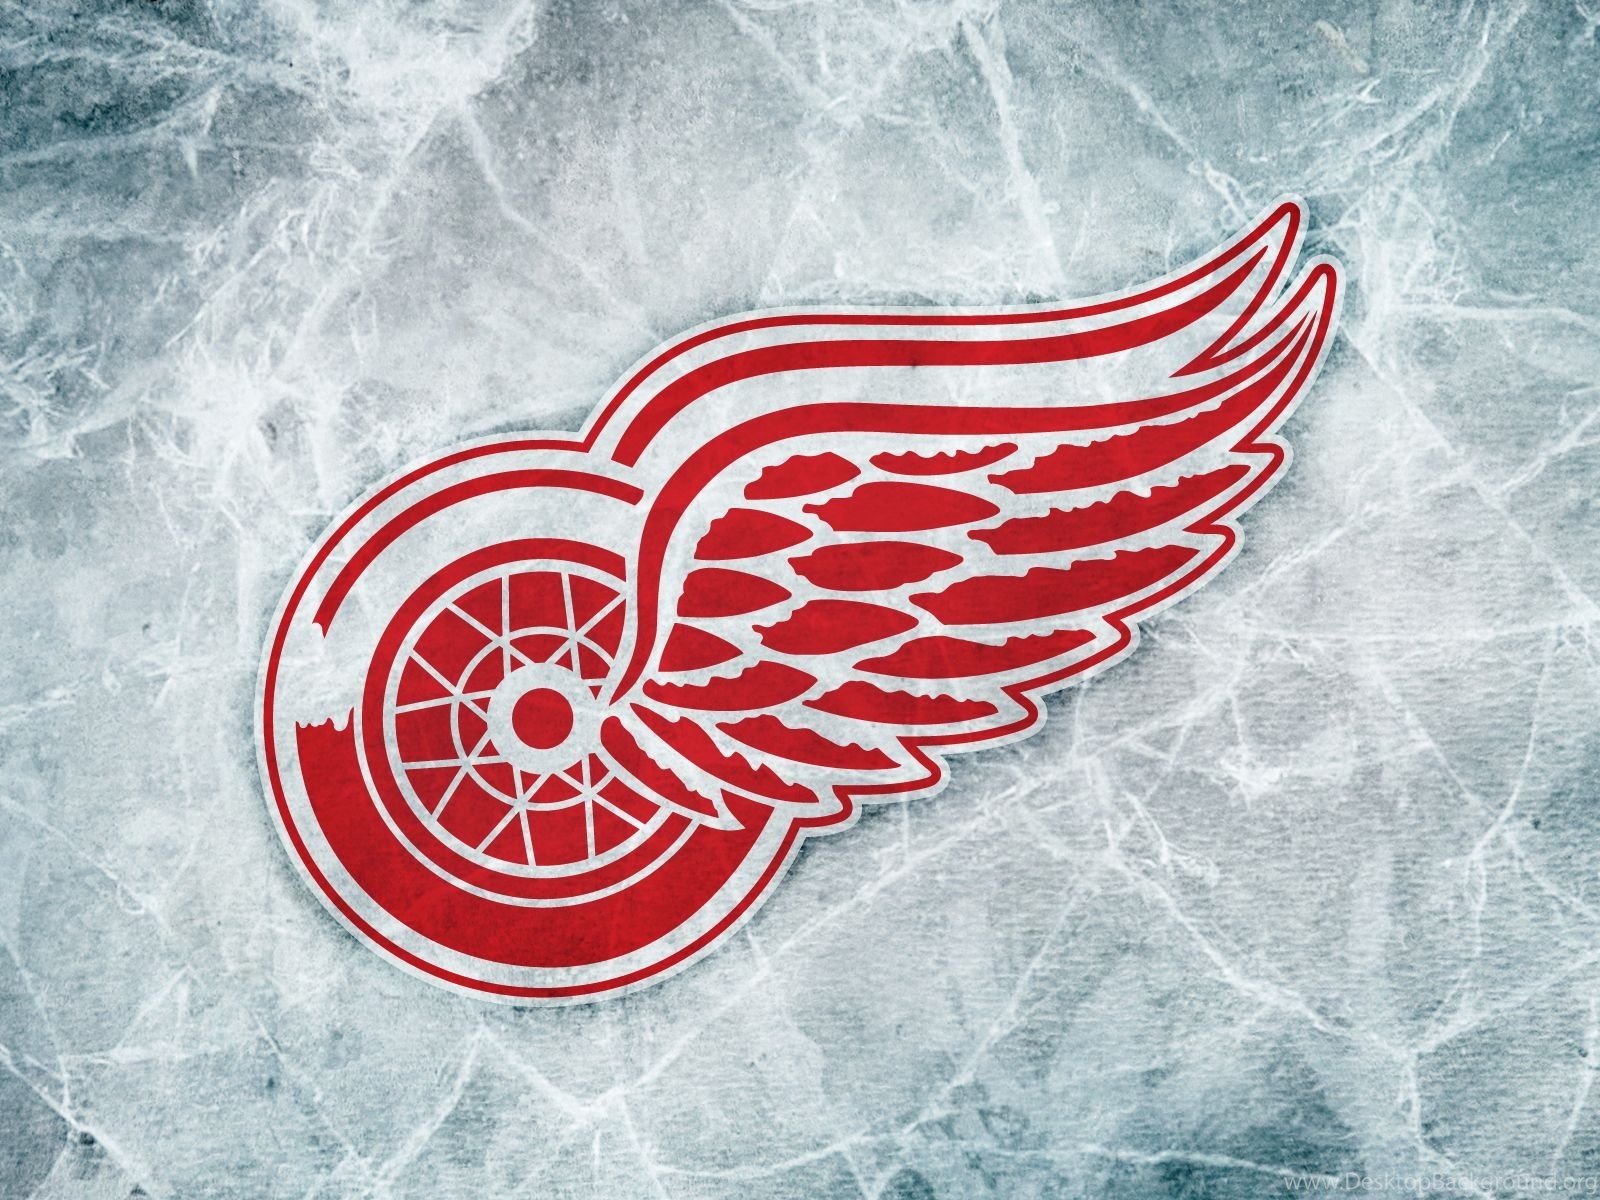 Логотипы команд нхл. Red Wings хк. Детройт ред Уингз. Команды НХЛ. НХЛ Детройт ред Уингз.